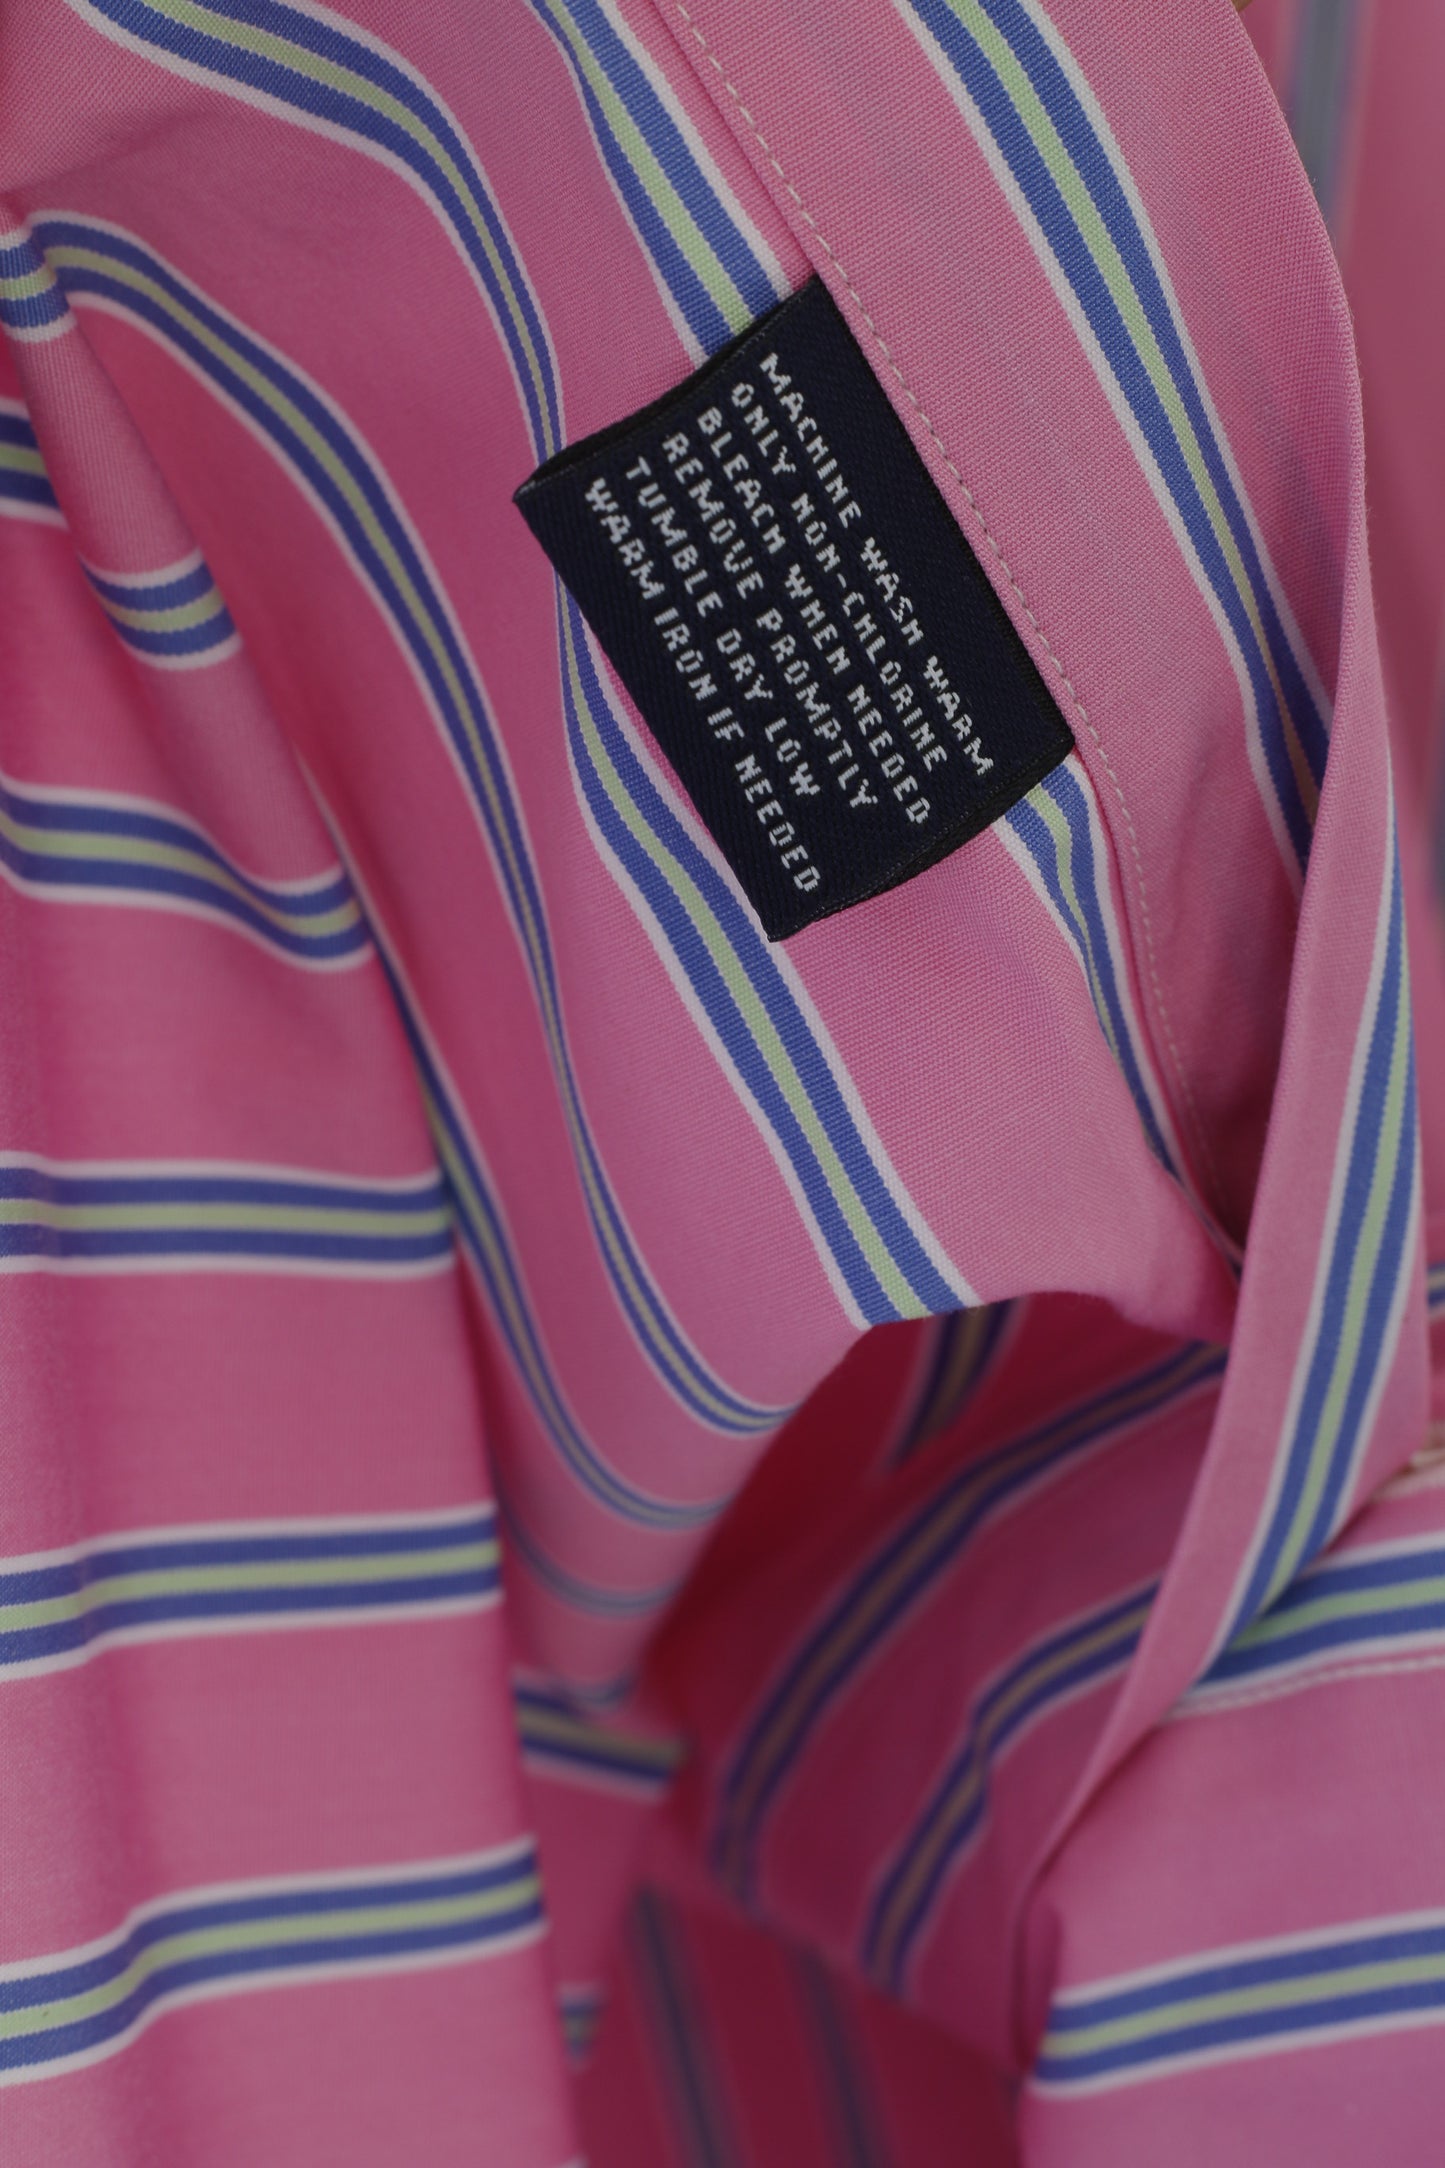 American Living Men XL Casual Shirt Pink Cotton Striped Button Down Collar Long Sleeve Top